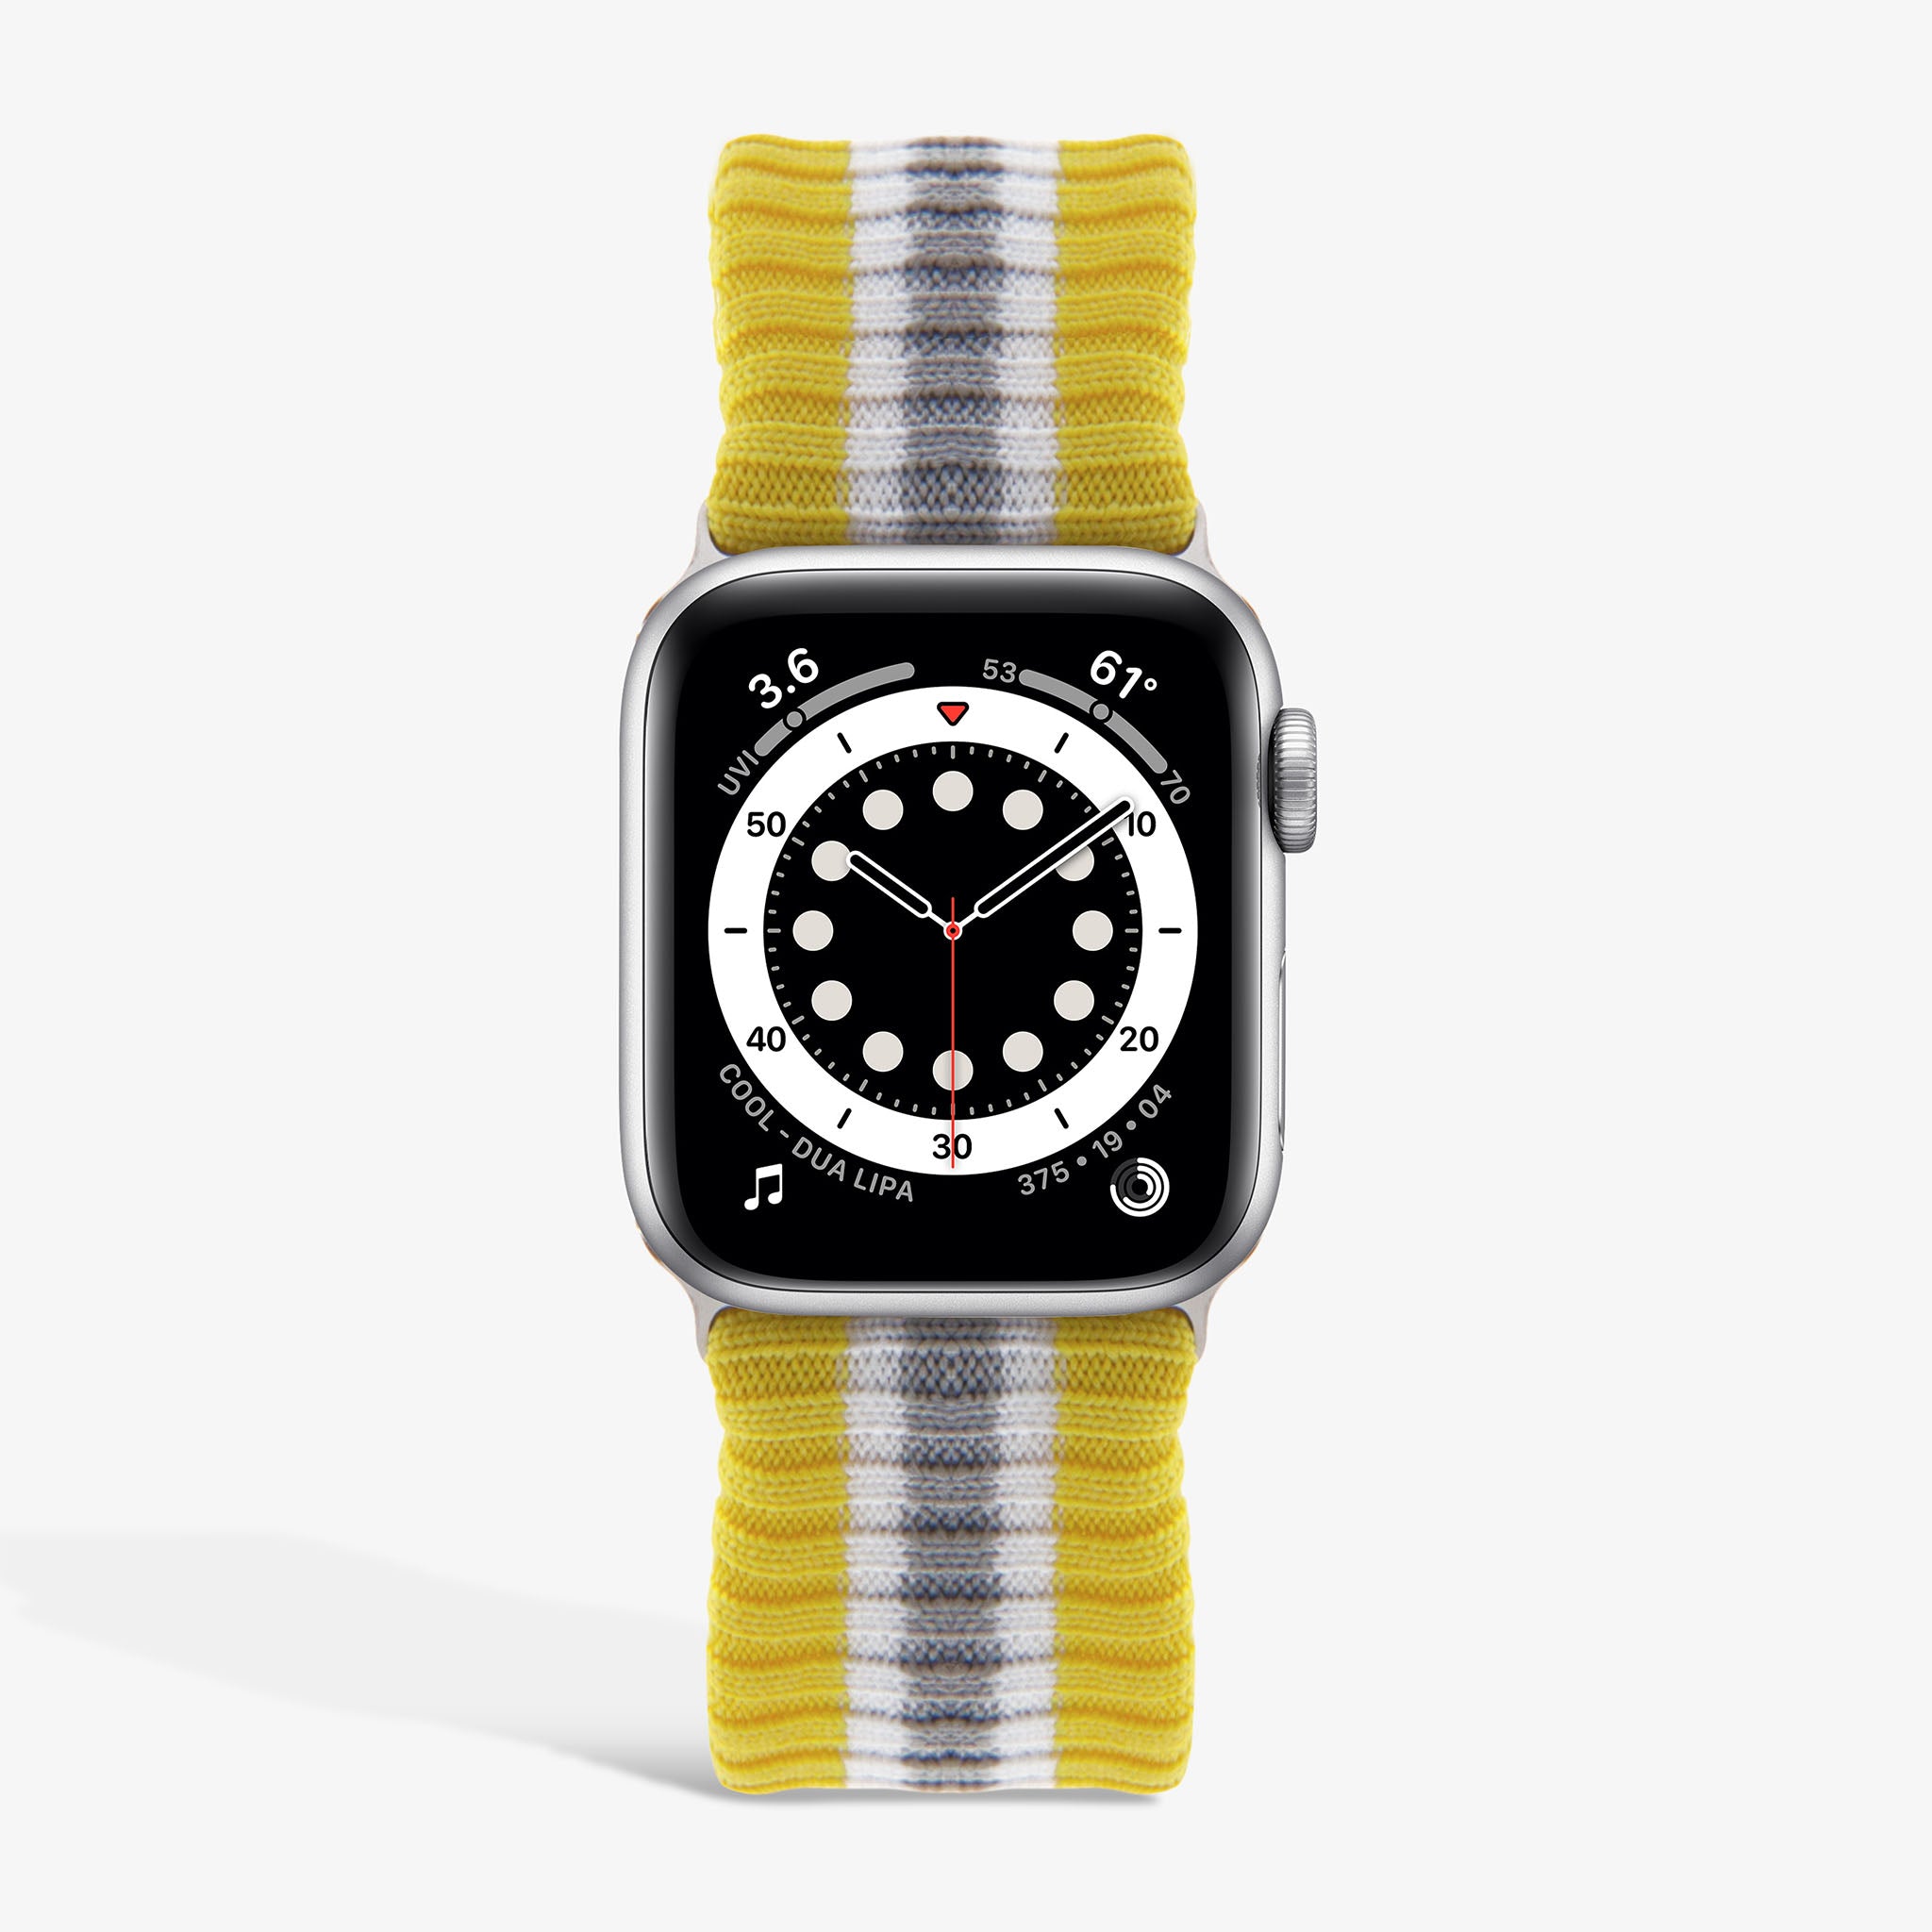 Knit Apple Watch Band - Varsity Yellow + Grey Stripe